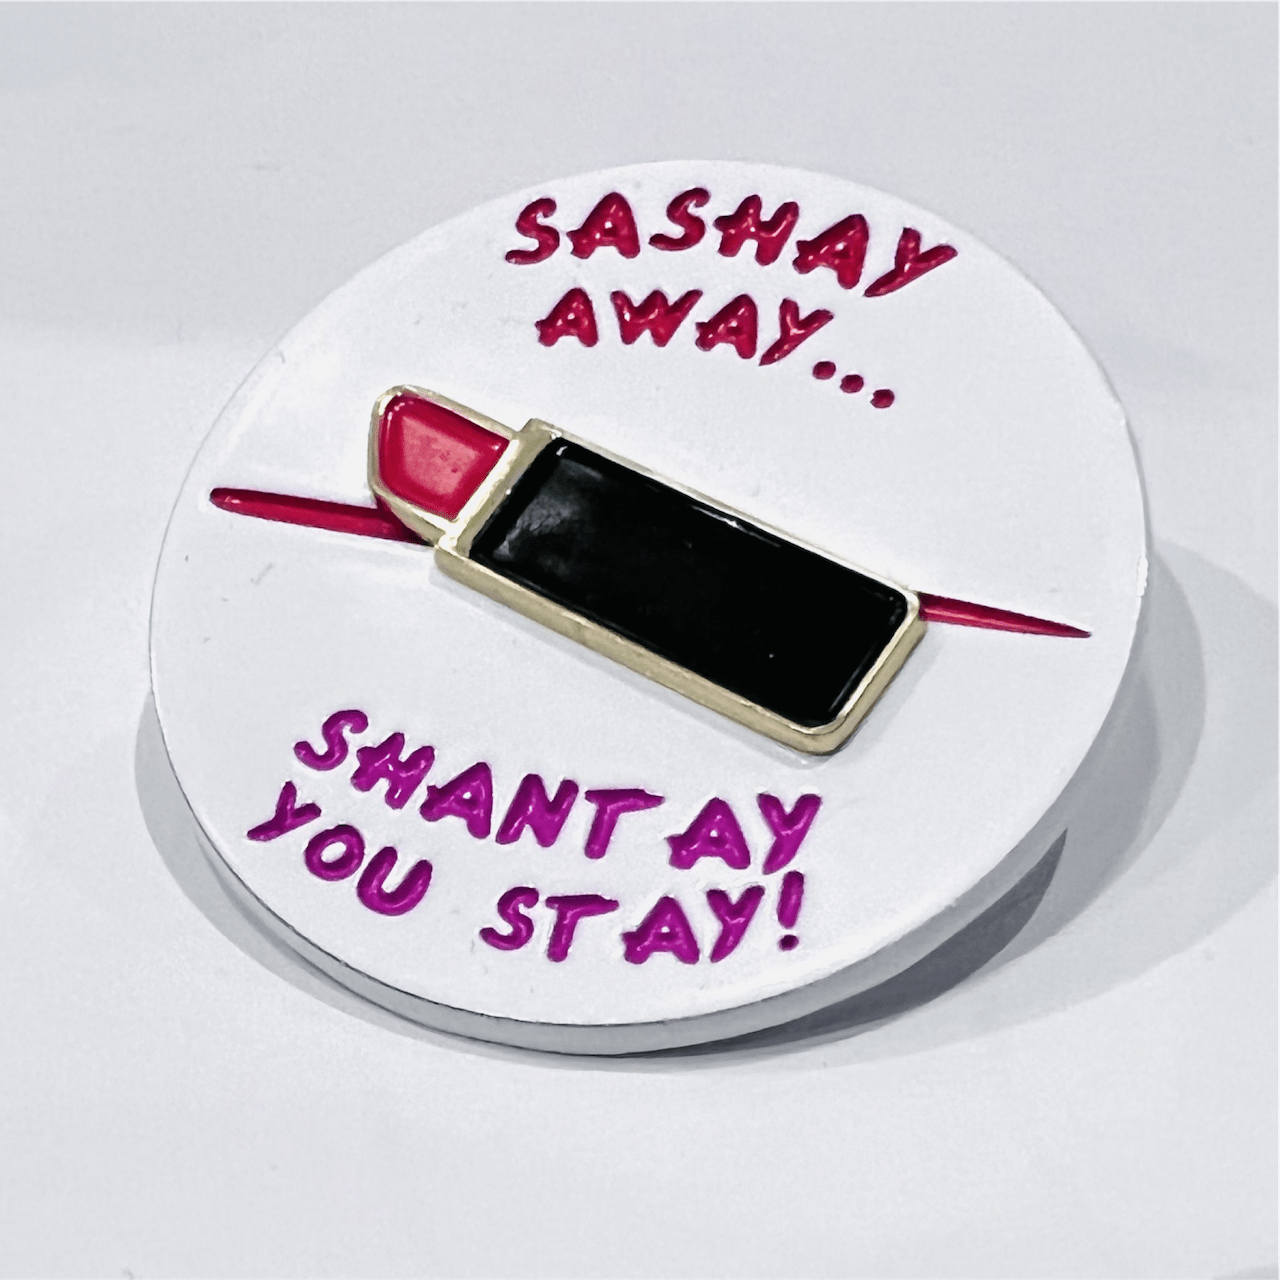 Pinbuds Enamel pin Sashay away. Shantay you stay spinning pin (limited edition)